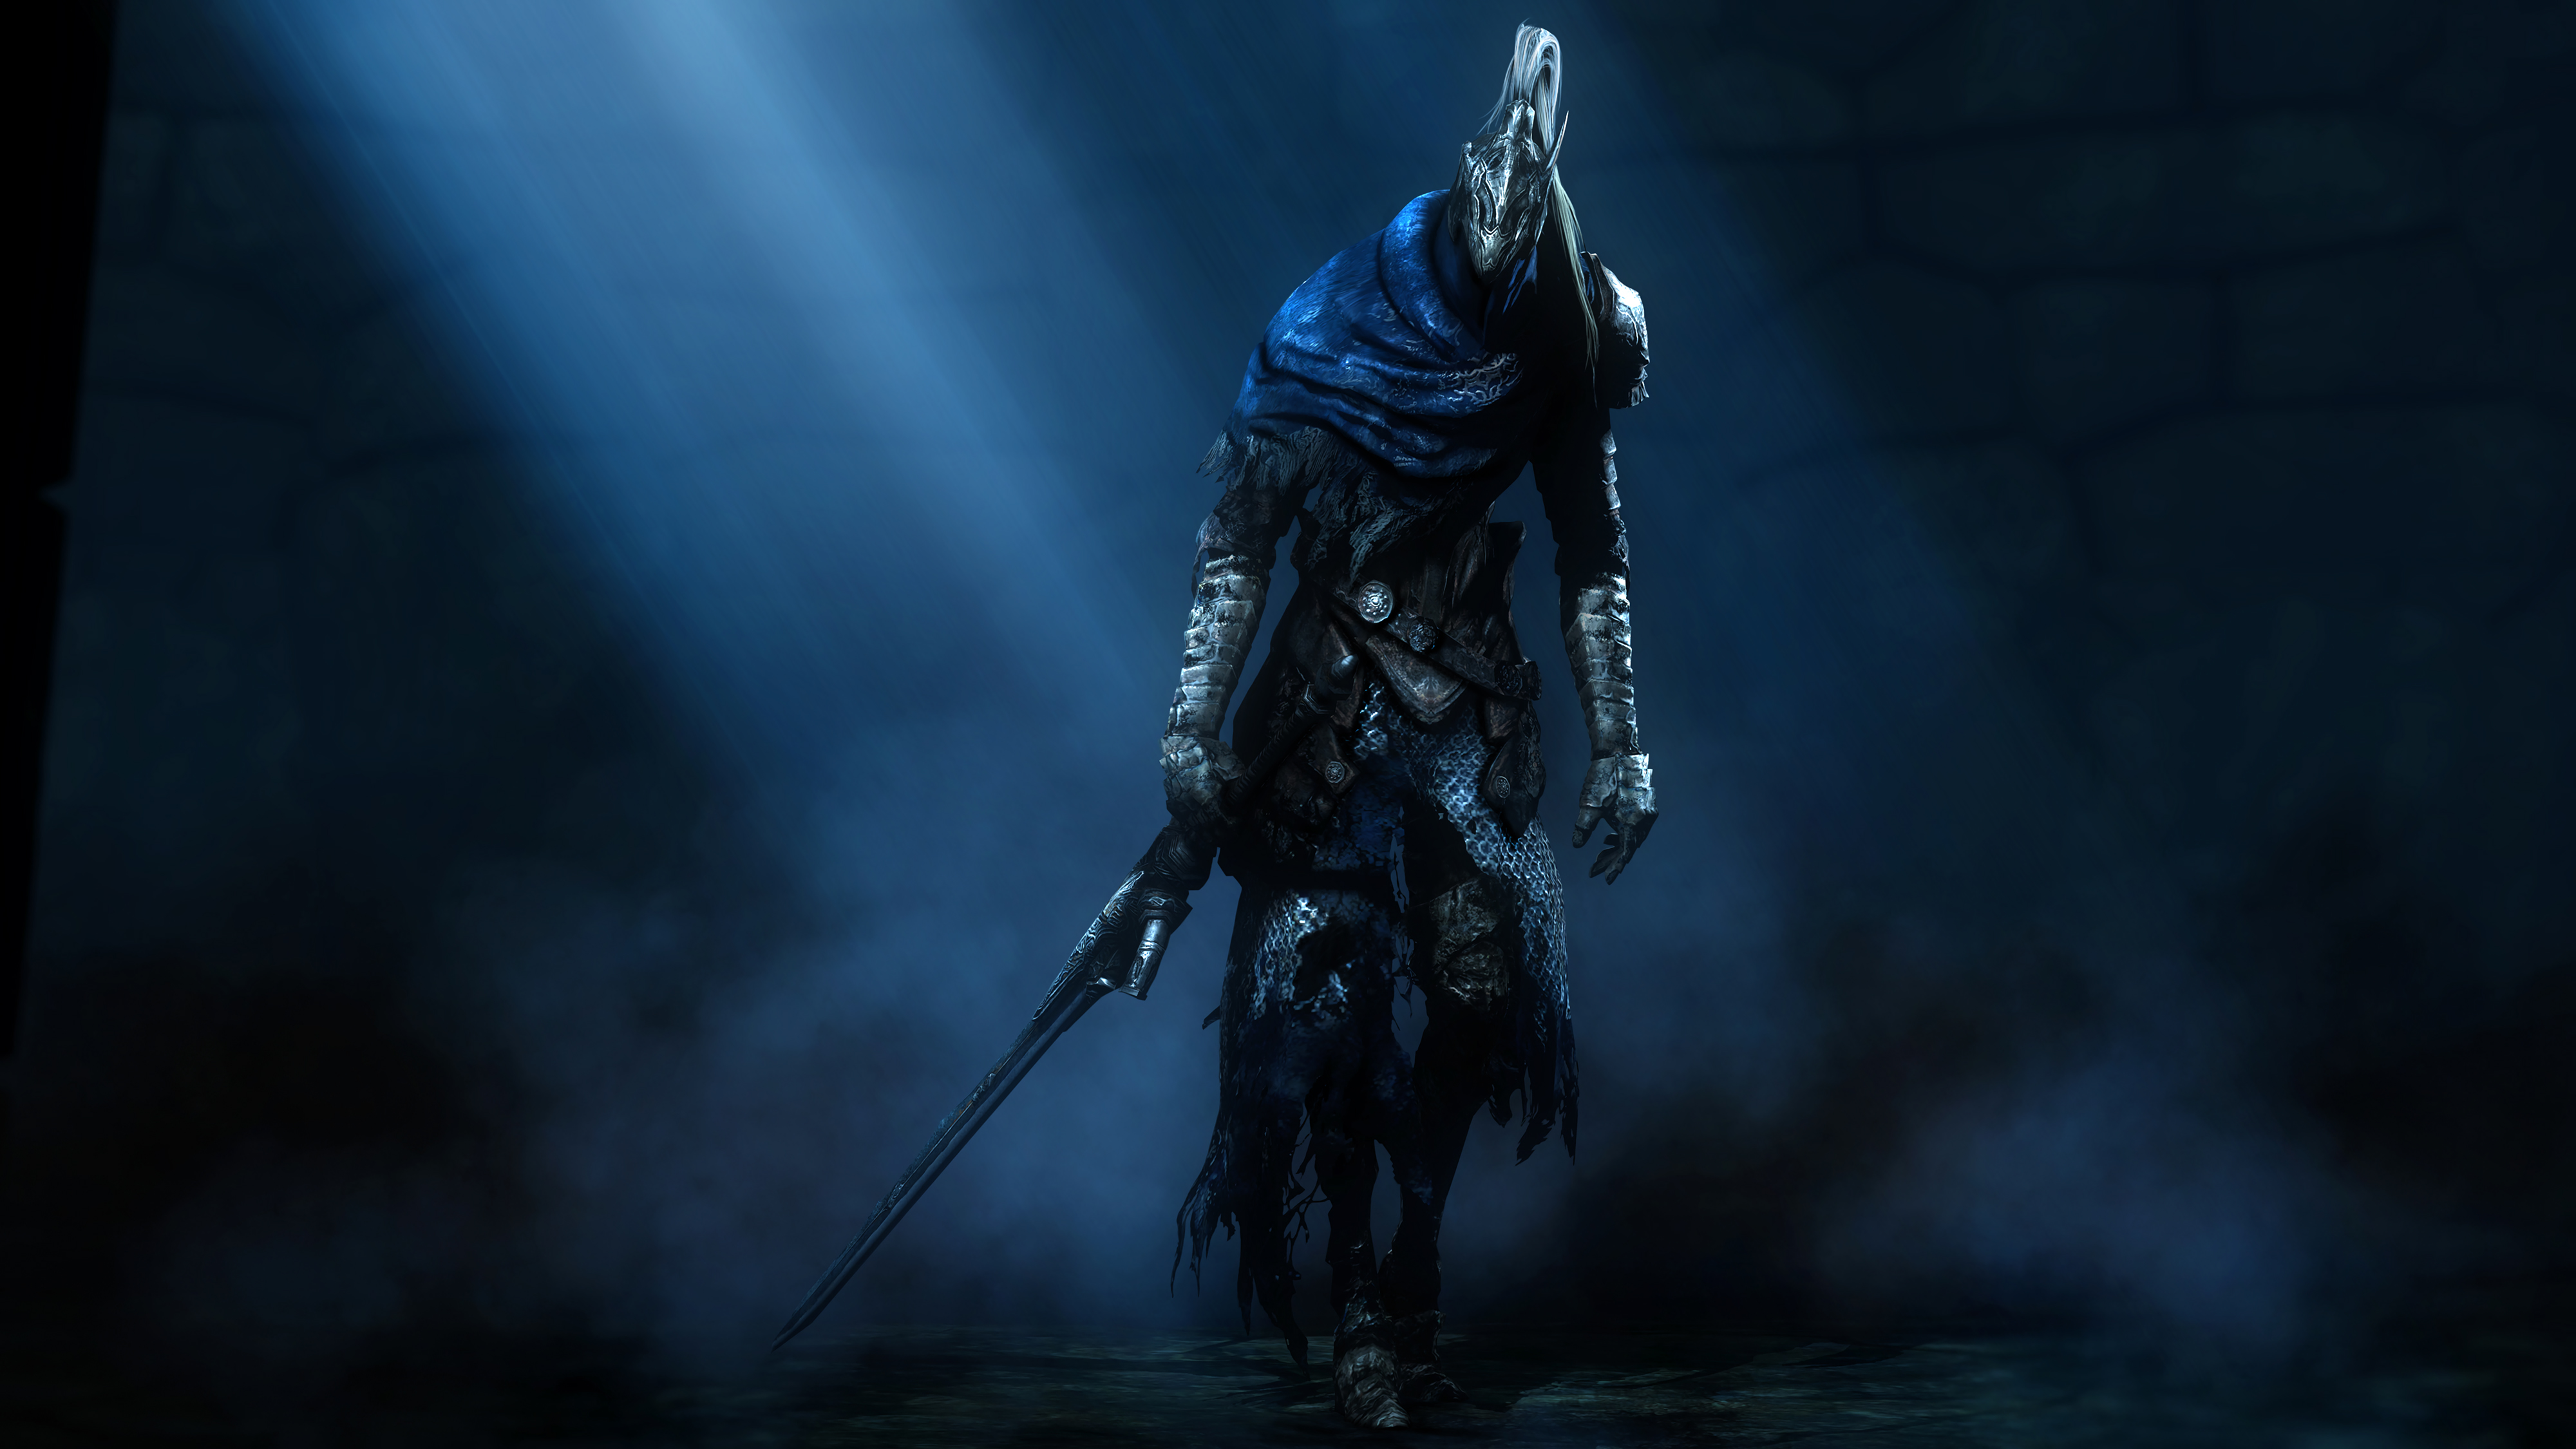 General 4000x2250 Dark Souls video games video game art sword knight Artorias Artorias the Abysswalker dark